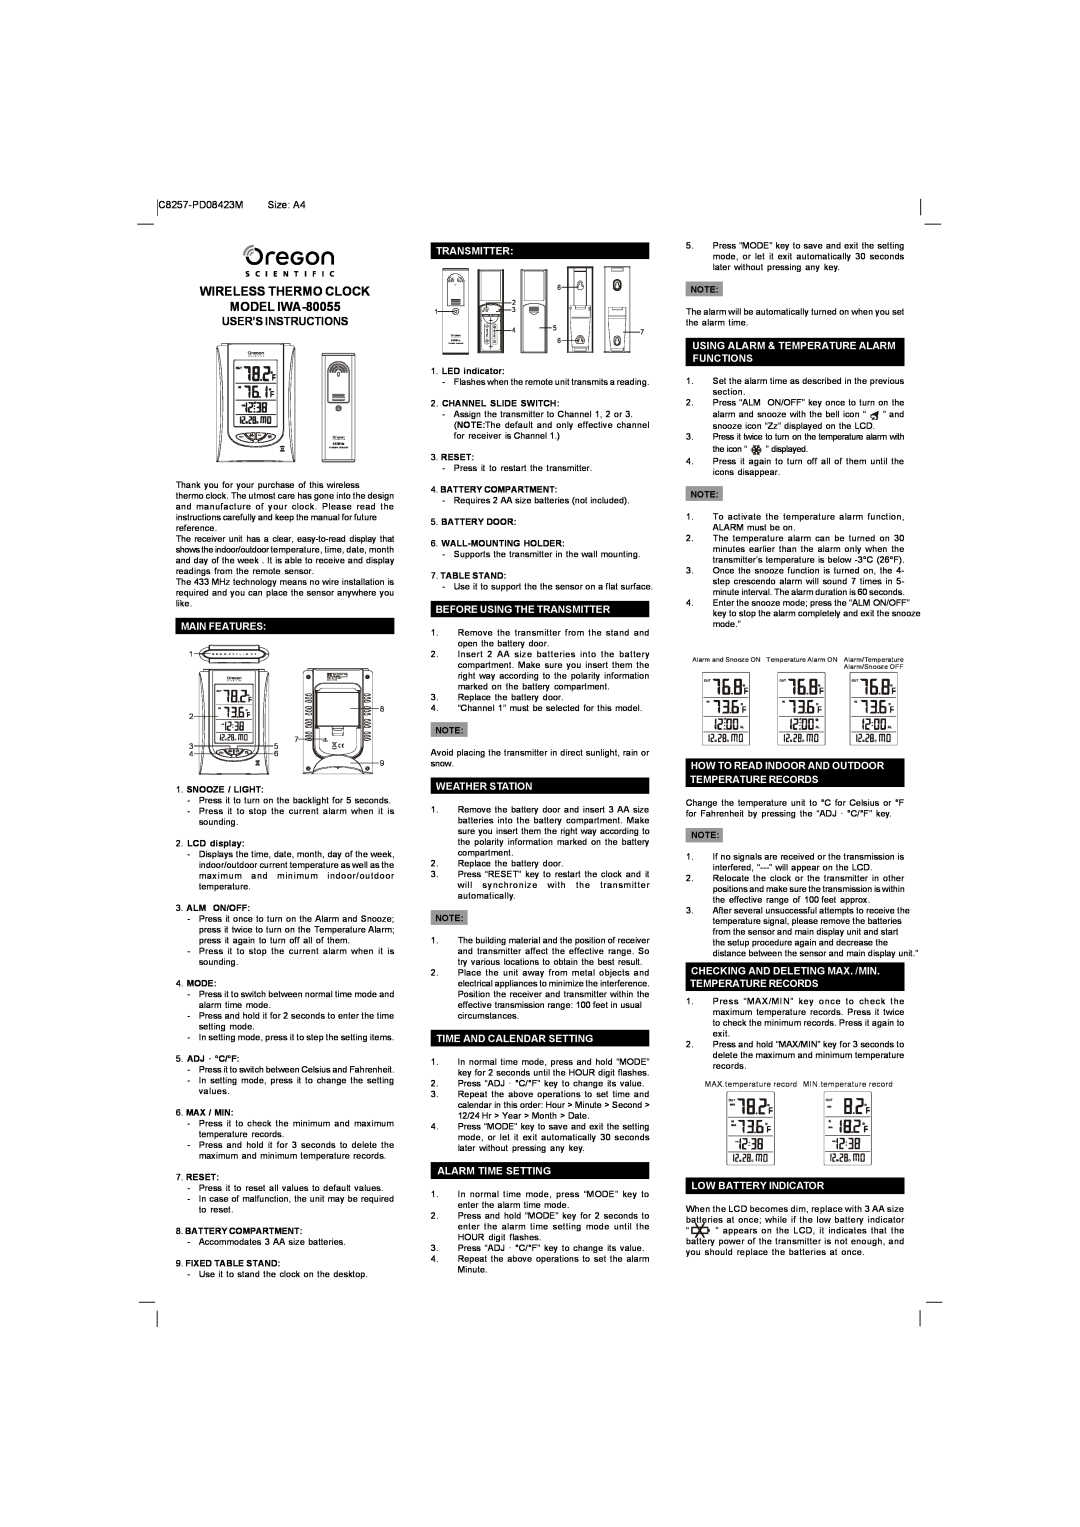 Oregon Scientific manual WIRELESS THERMO CLOCK MODEL IWA-80055, User’S Instructions 